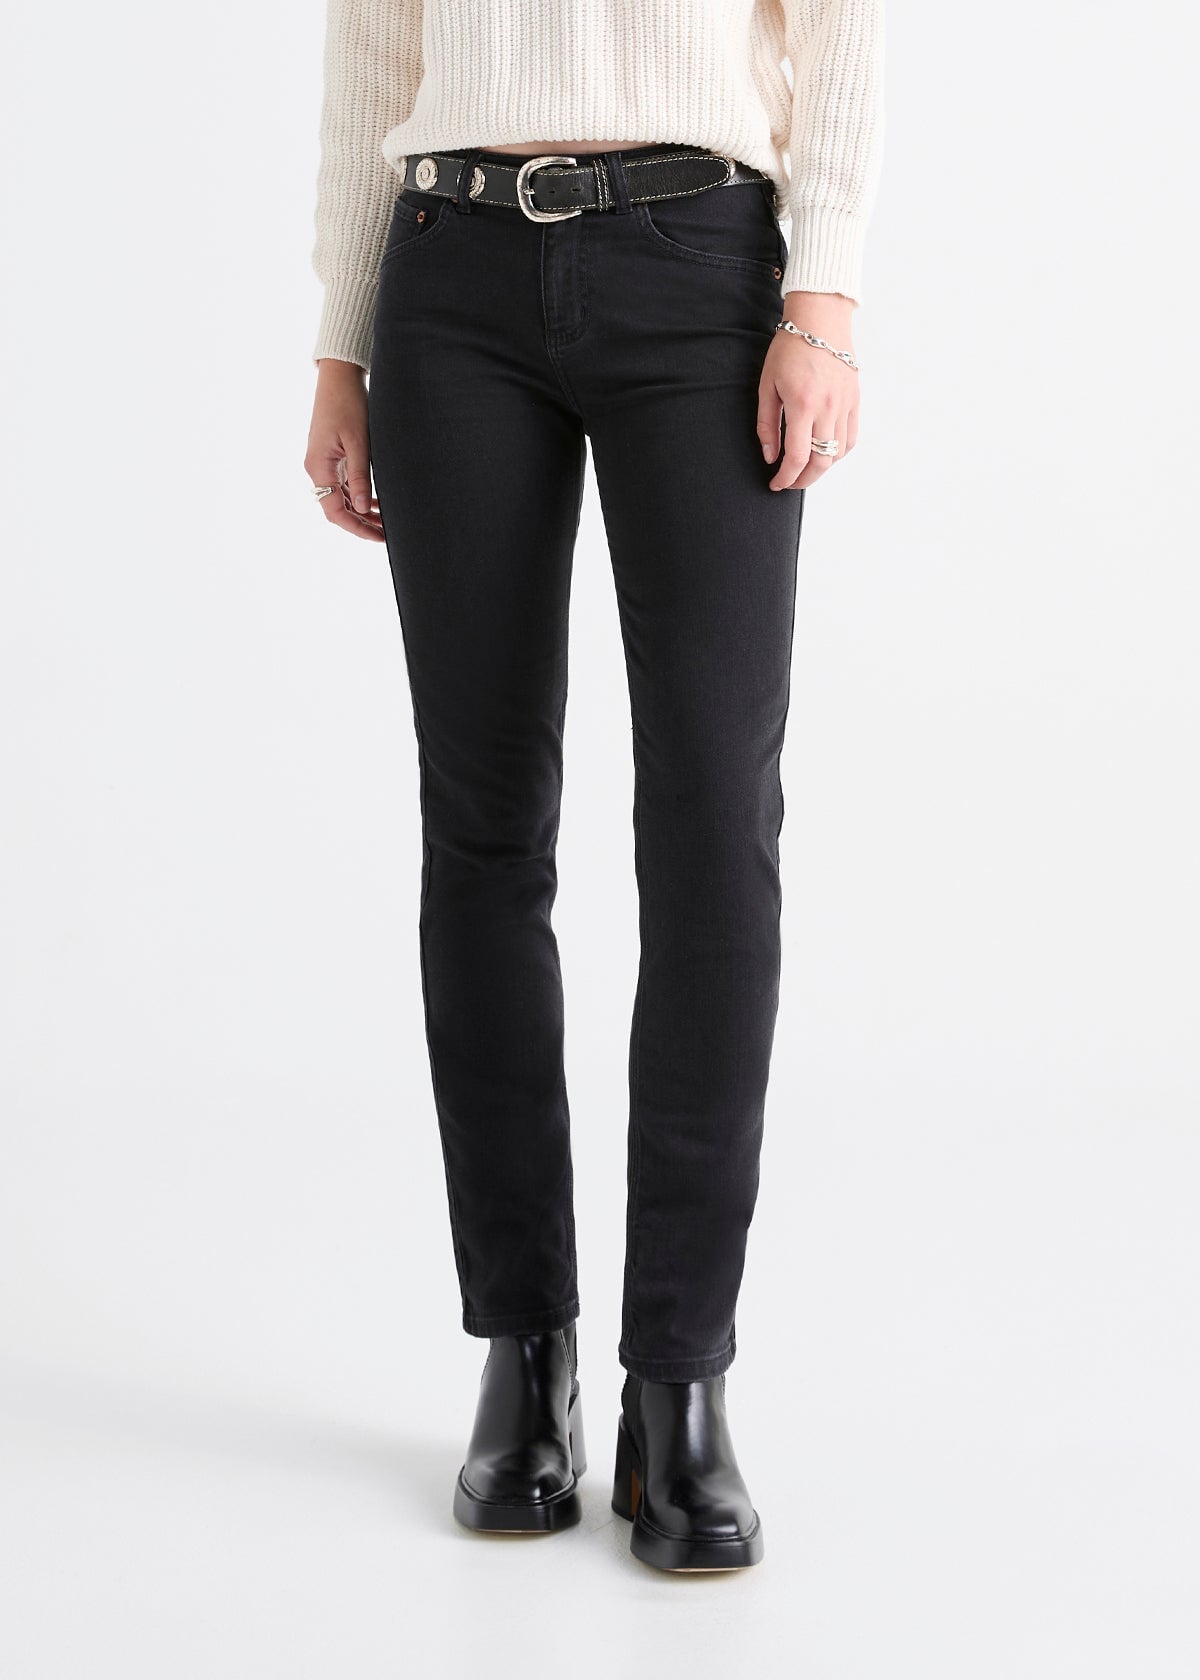 Structured slim-leg pant, Contemporaine, Shop Women%u2019s Skinny Pants  Online in Canada